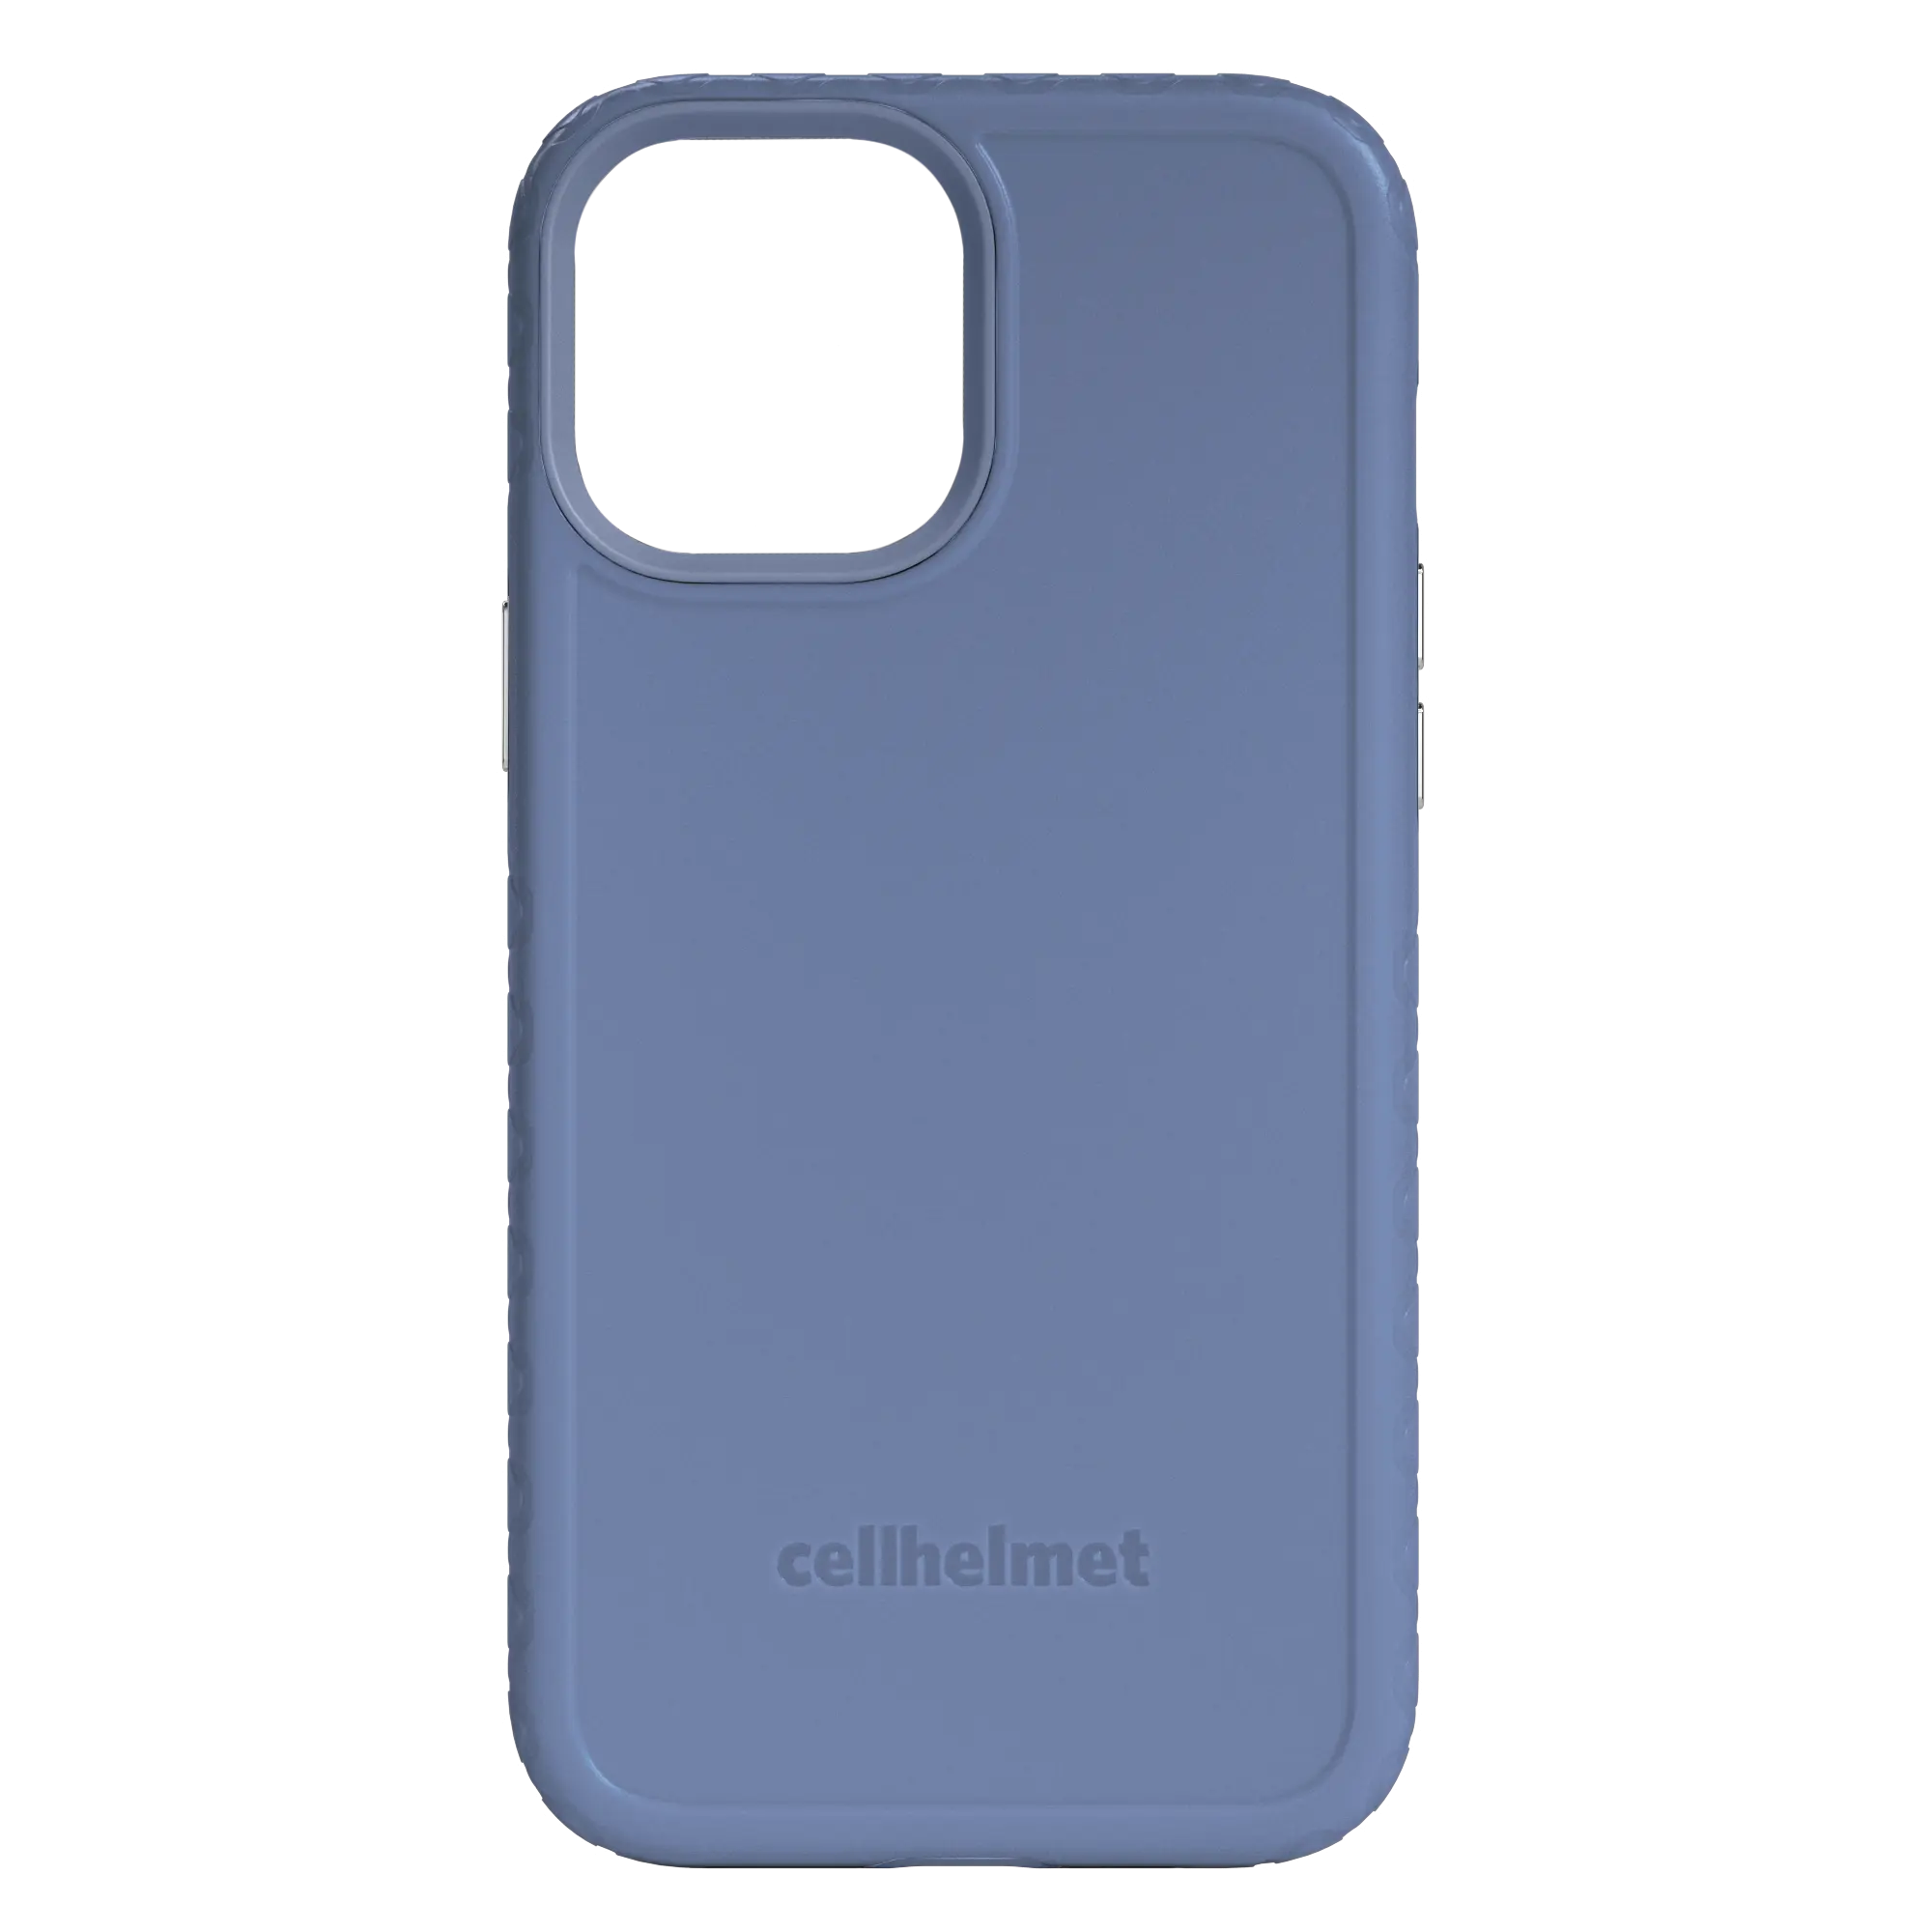 Blue cellhelmet Customizable Case for iPhone 12 Pro Max